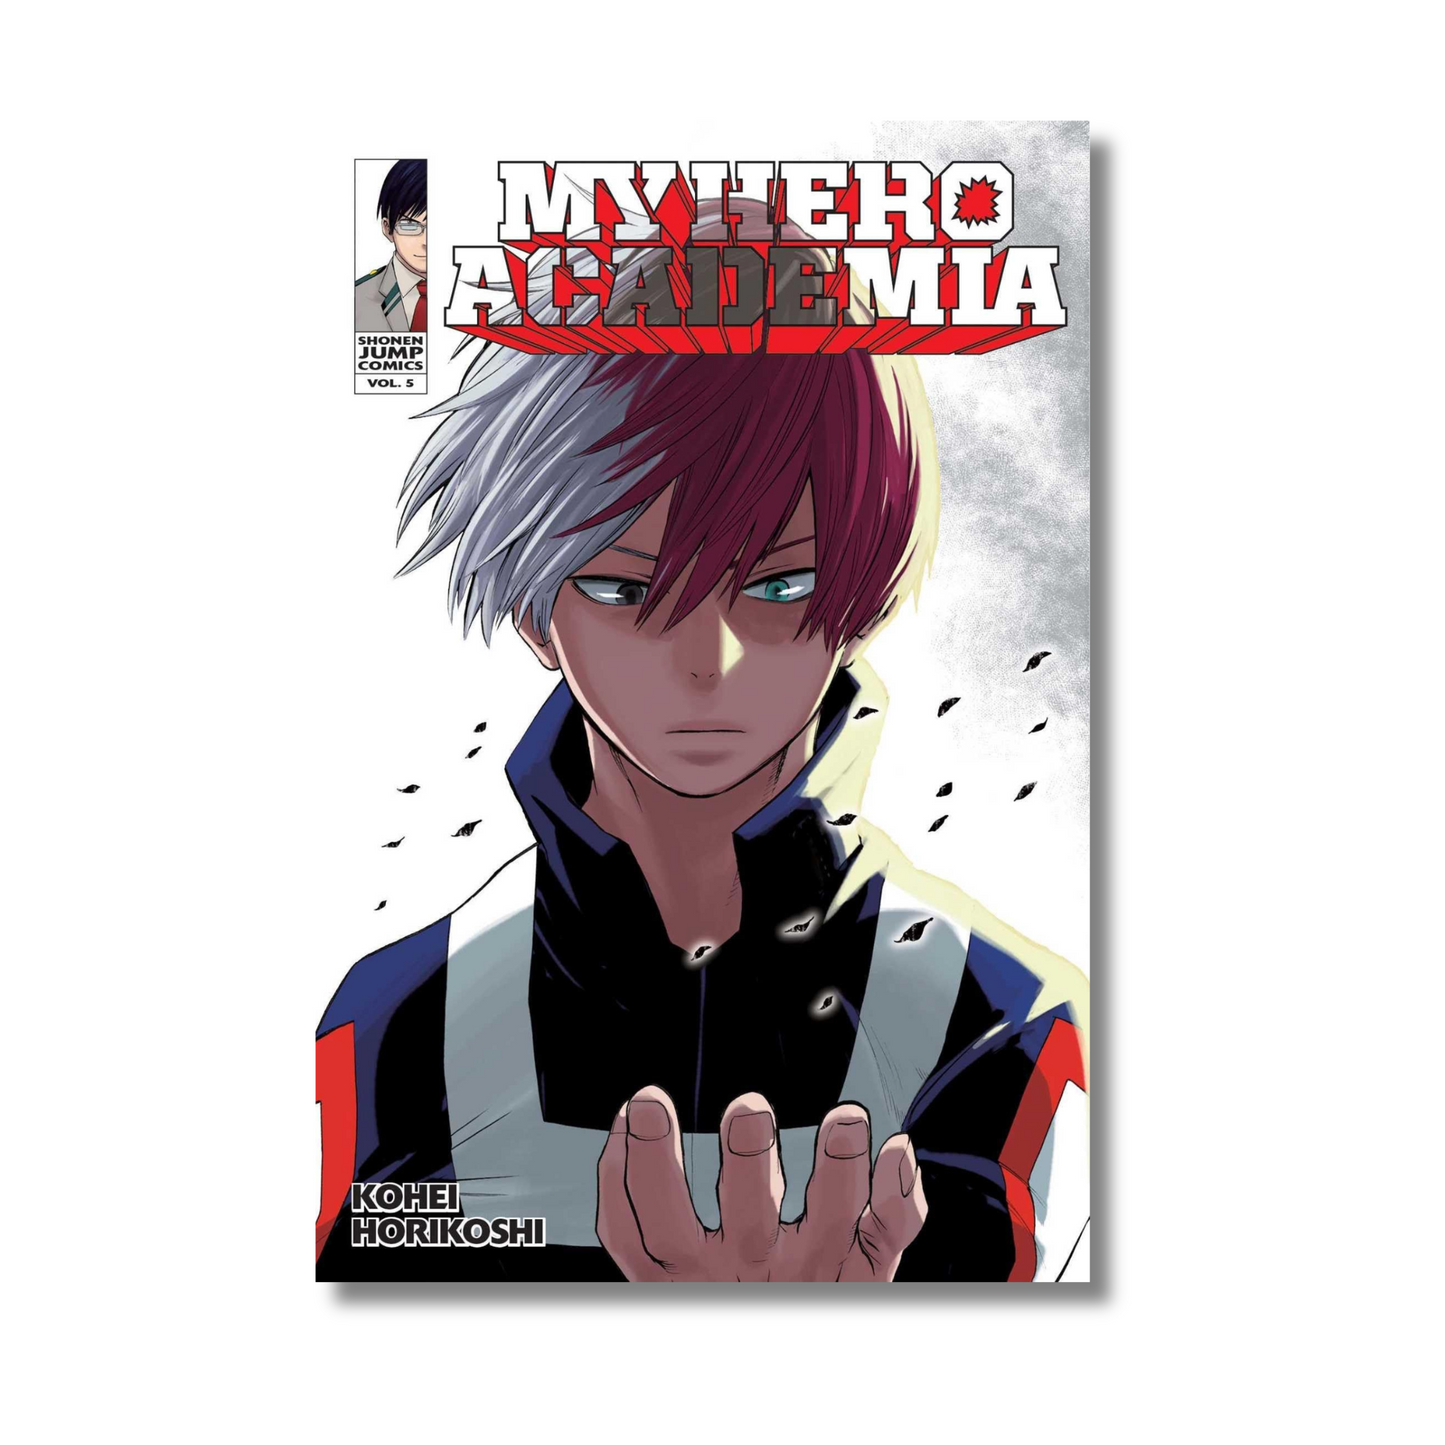 My Hero Academia Vol 5 By Kohei Horikoshi (Paperback)